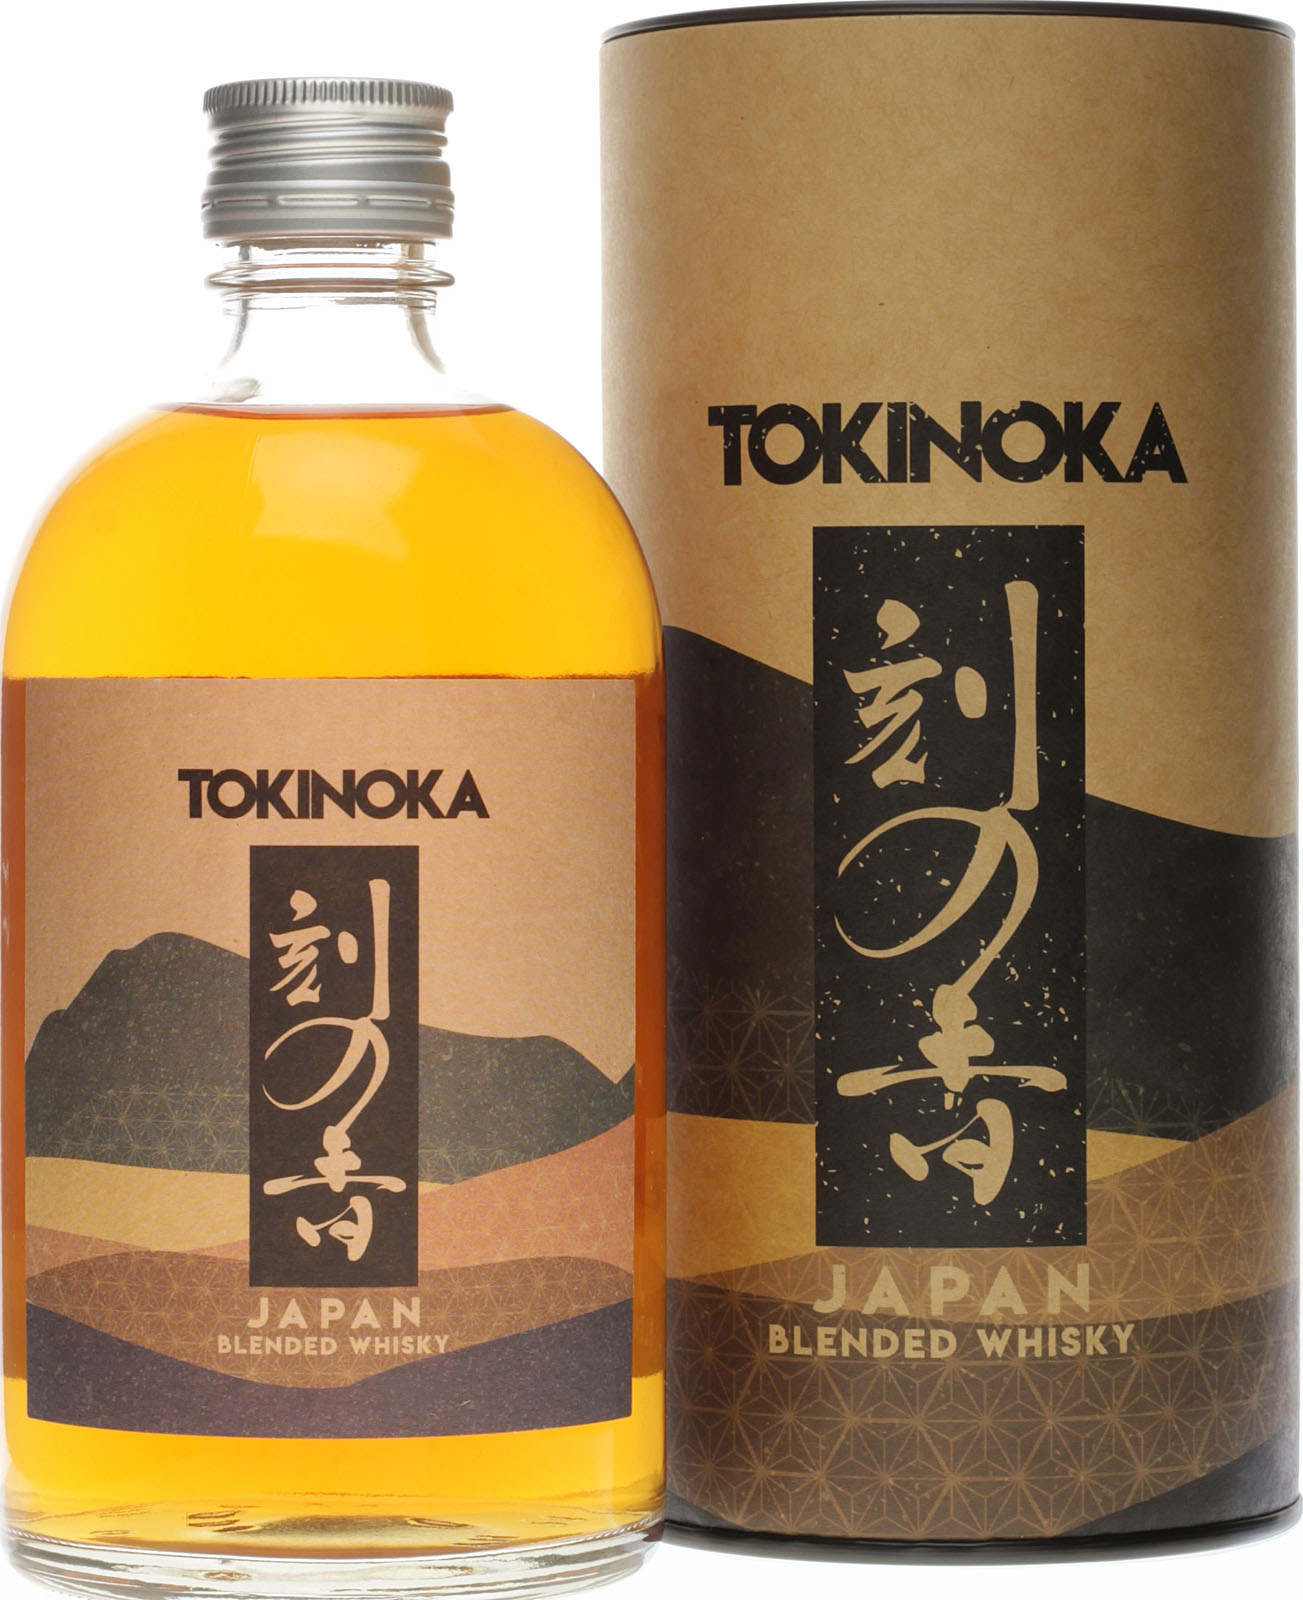 Tokinoka Japanese Whisky mi 500 ml und 40 % Vol. aus Japan